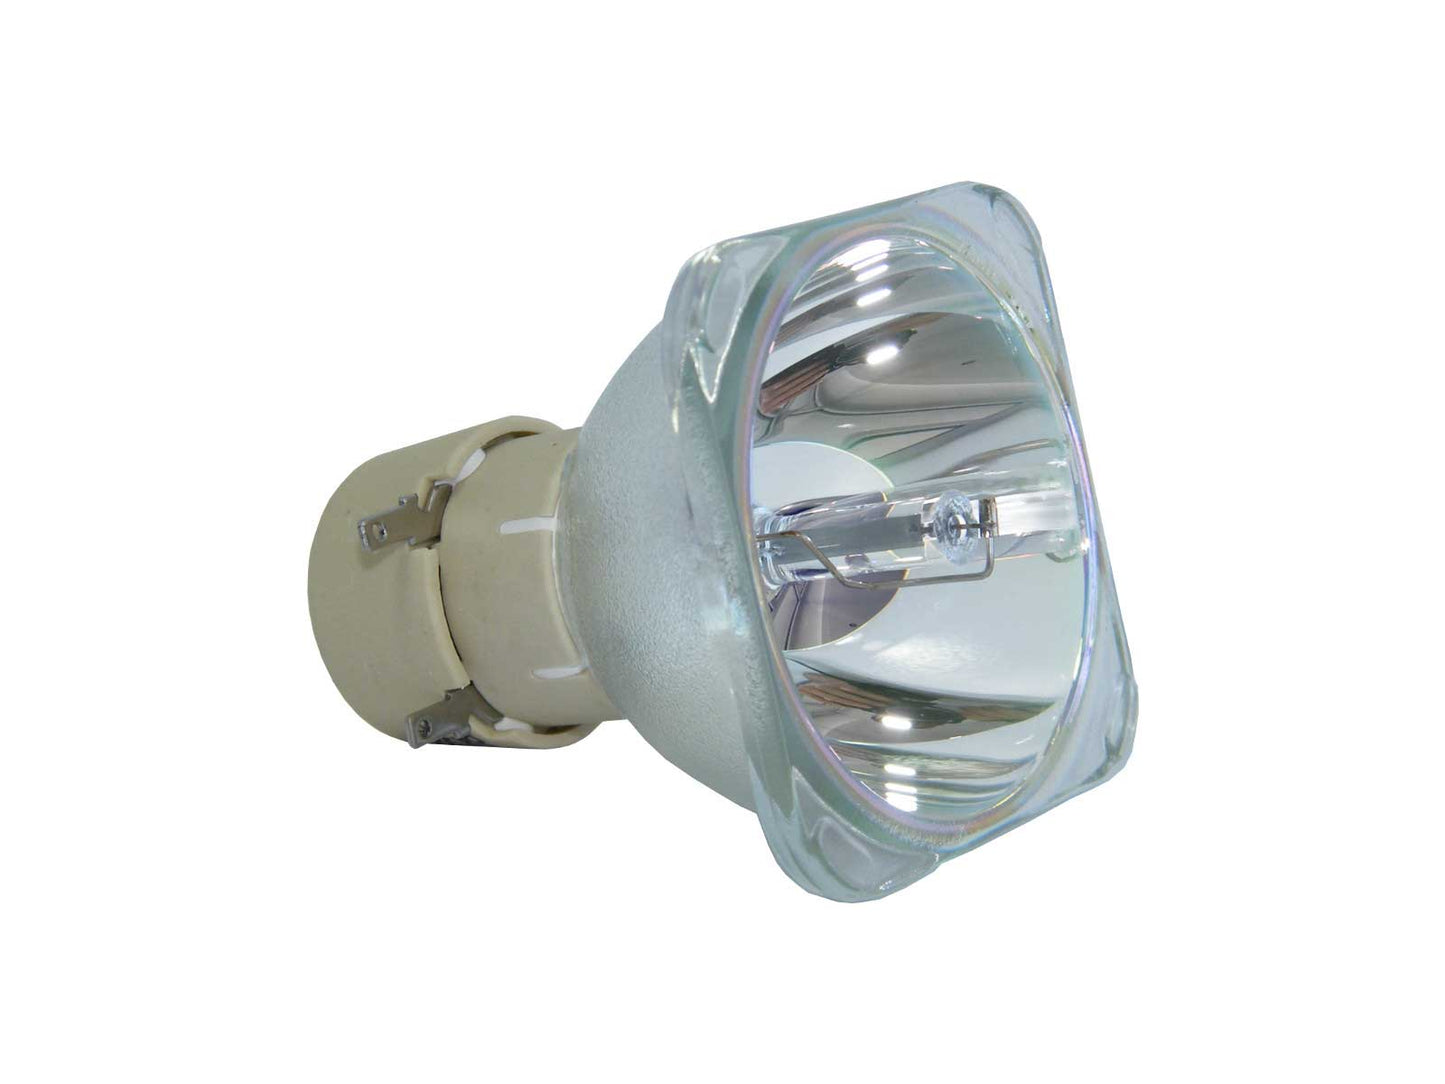 azurano Beamerlampe für RICOH 512758 TYPE14 Ersatzlampe Projektorlampe - Bild 1